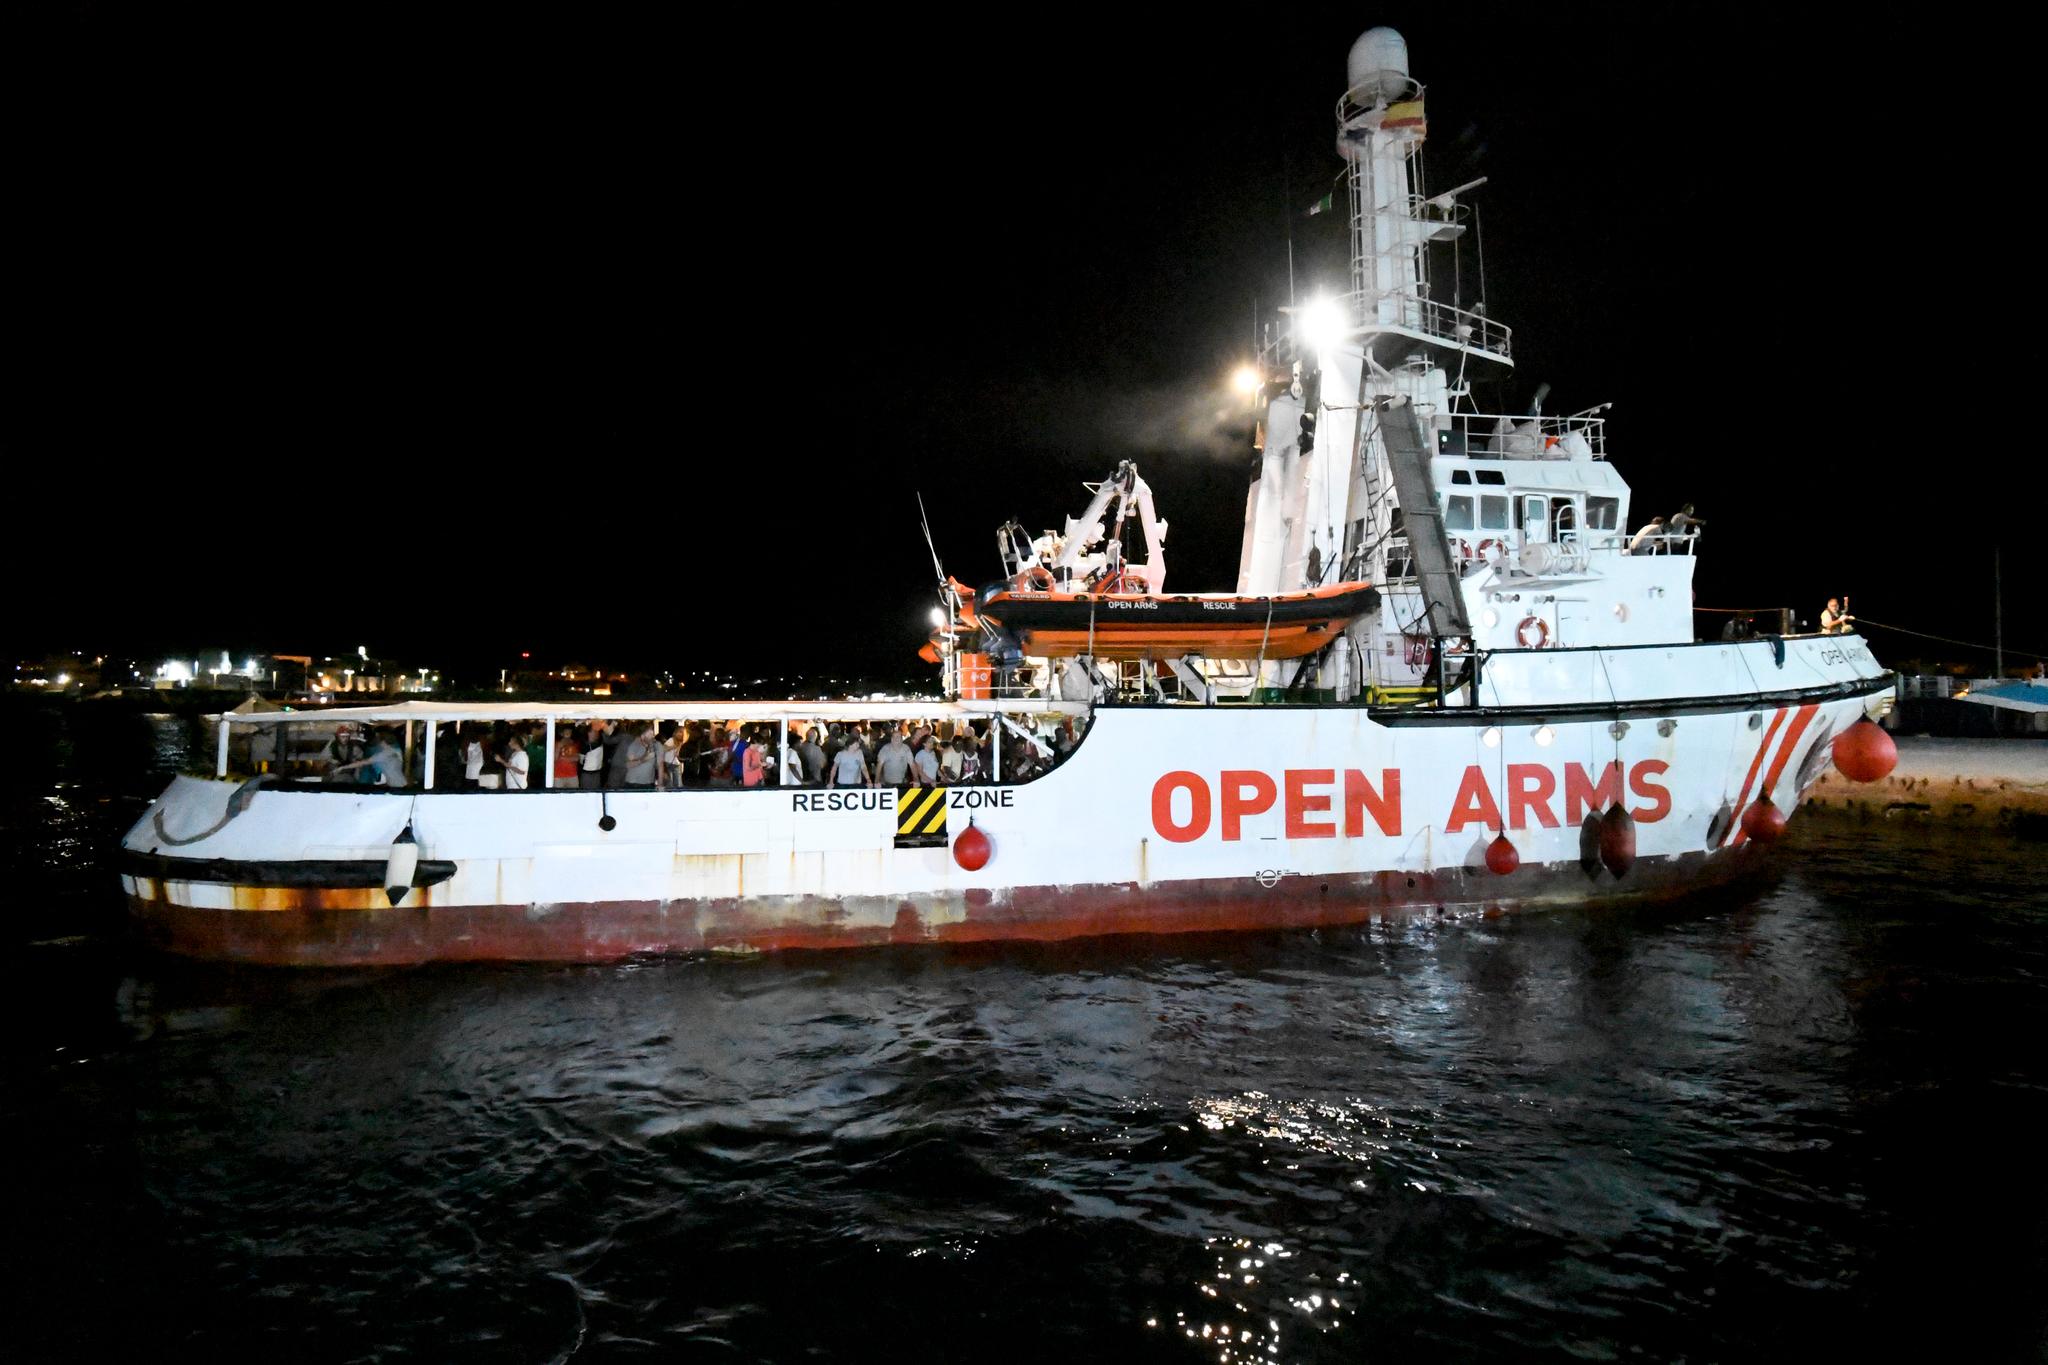 Open Arms ankom den italienske øya Lampedusa sent tirsdag kveld. 